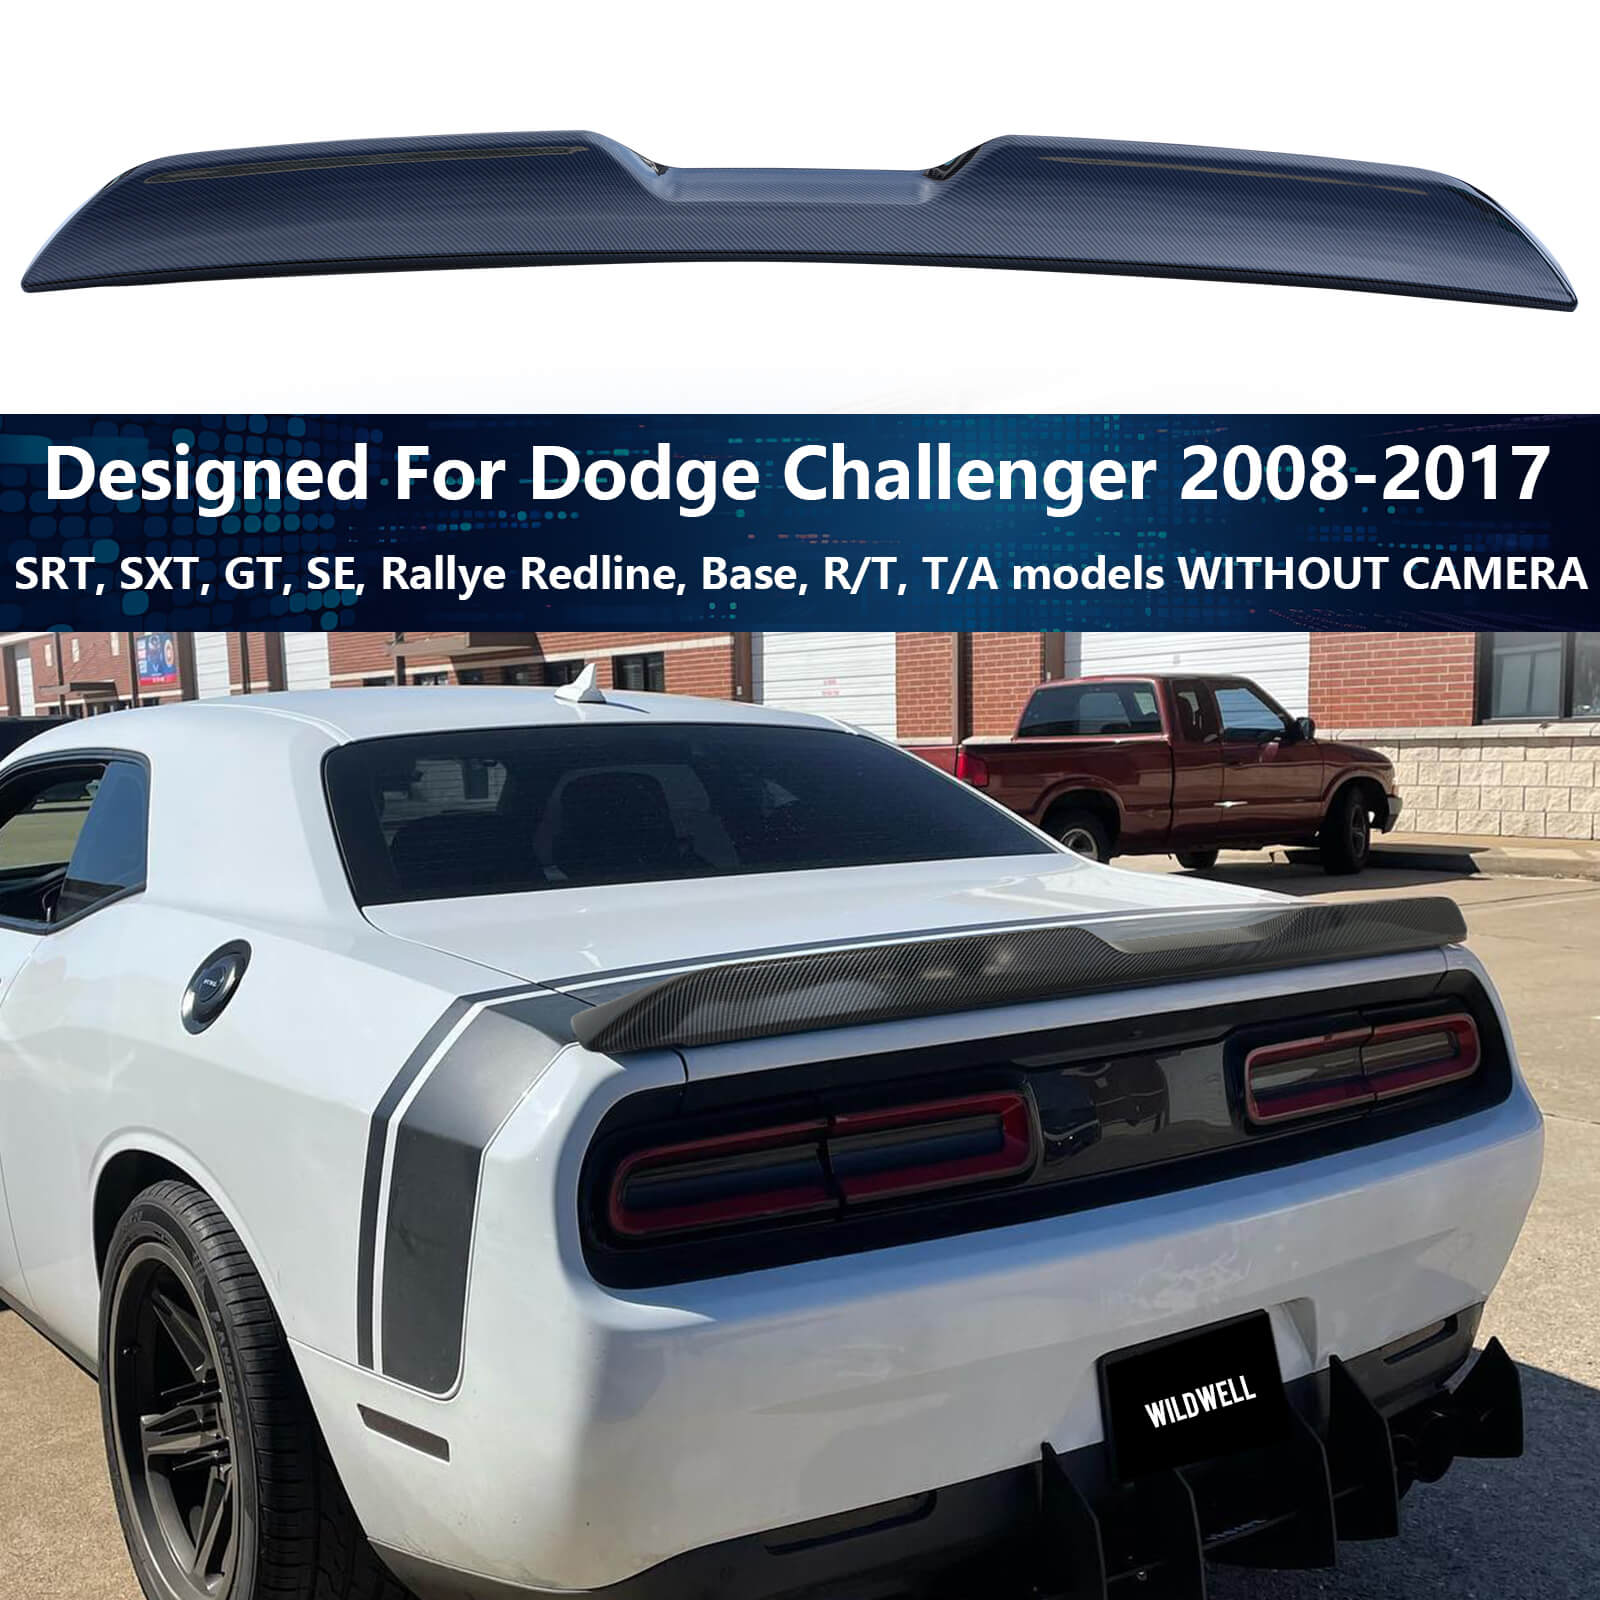 {WildWell}{Dodge Rear Spoiler}-{Challenger Spoiler 2008-2017/2}-Carbon Fiber Style